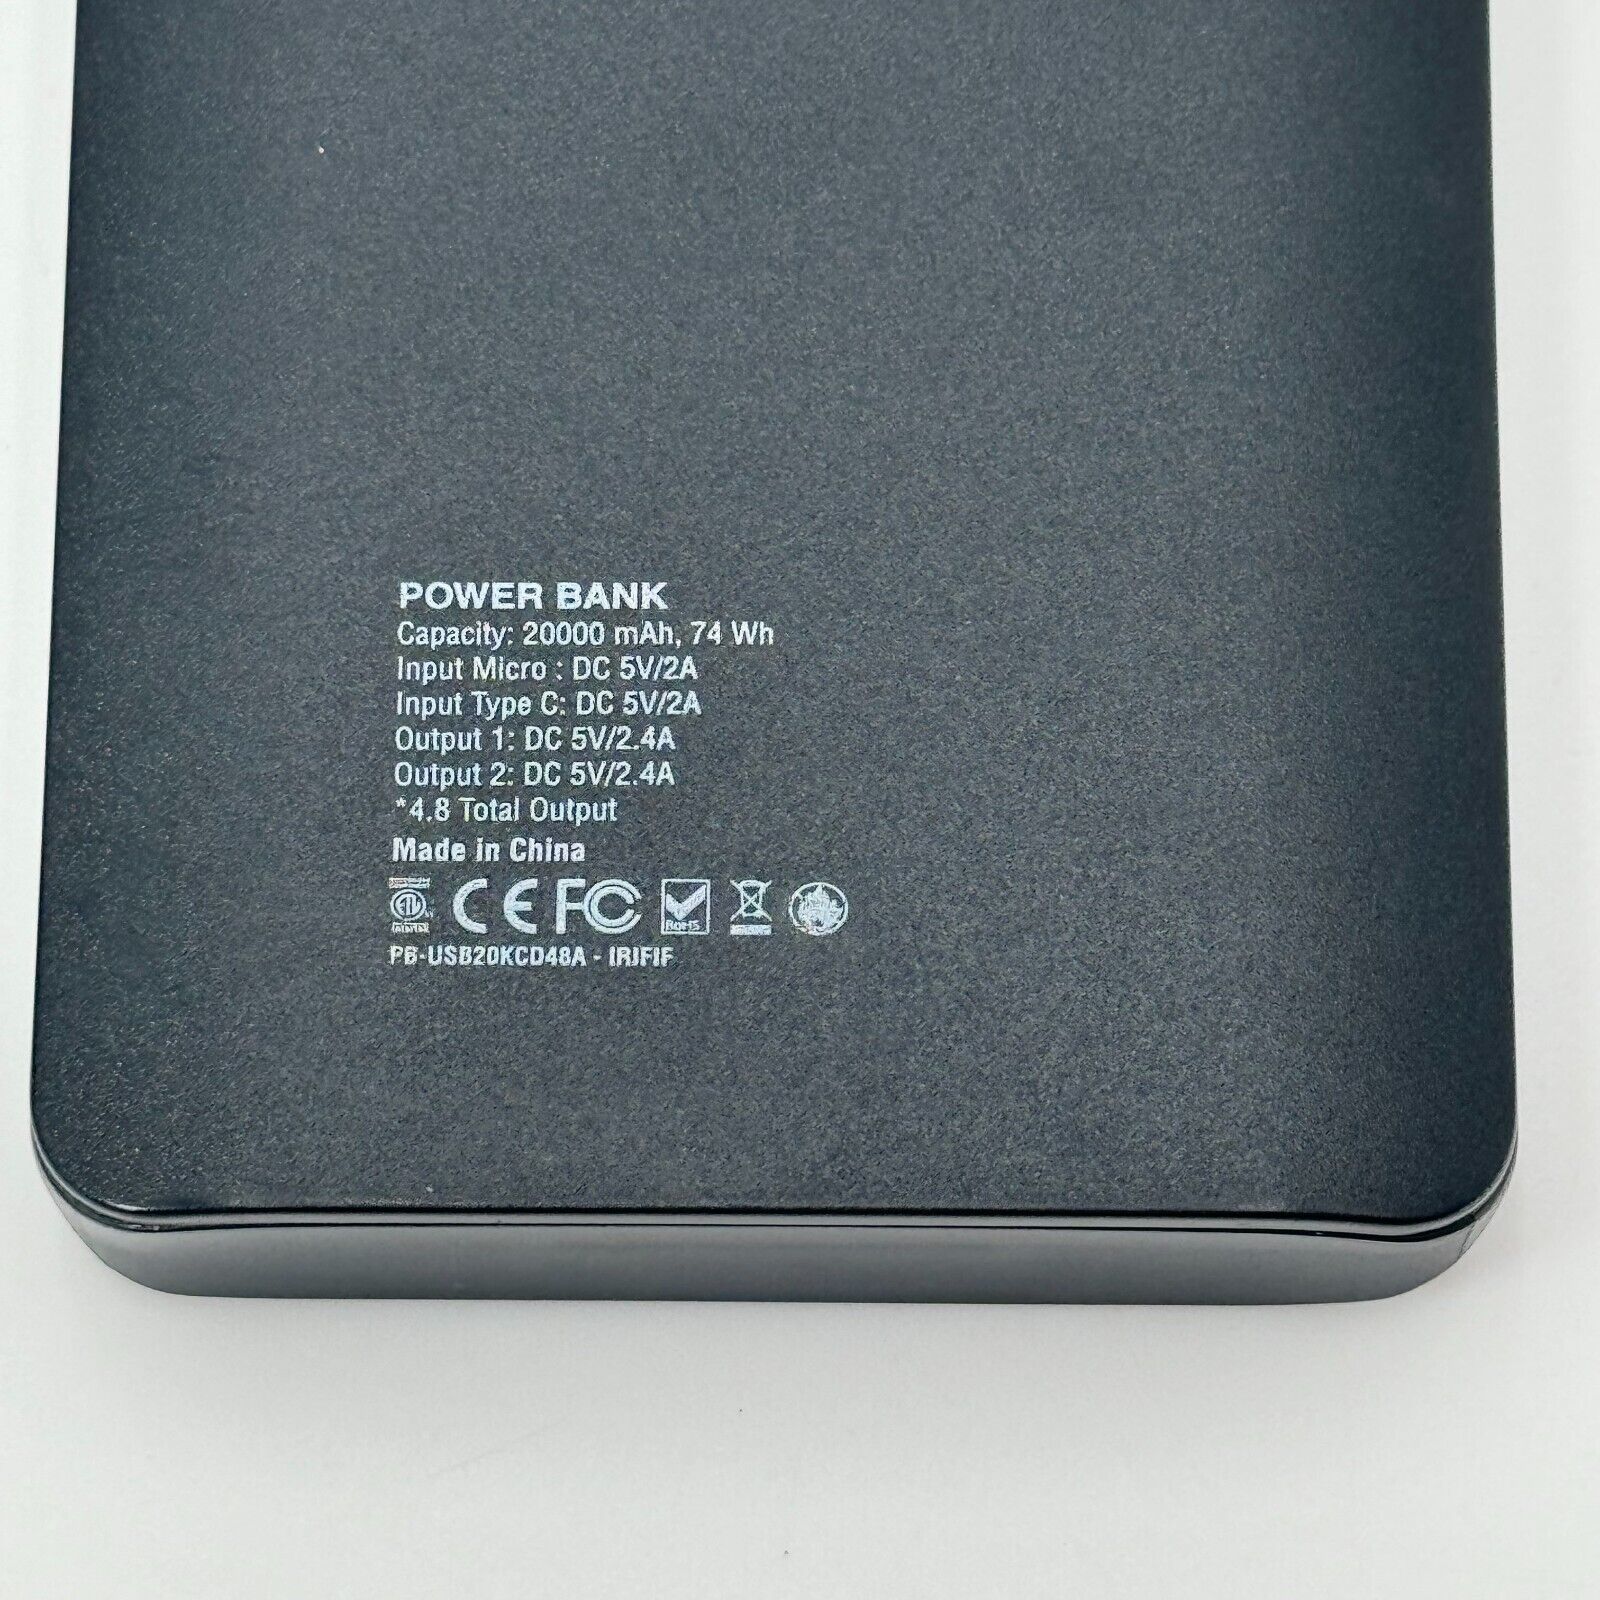 ZGEAR 20,000 mAh High Capacity Power Bank With LCD Display